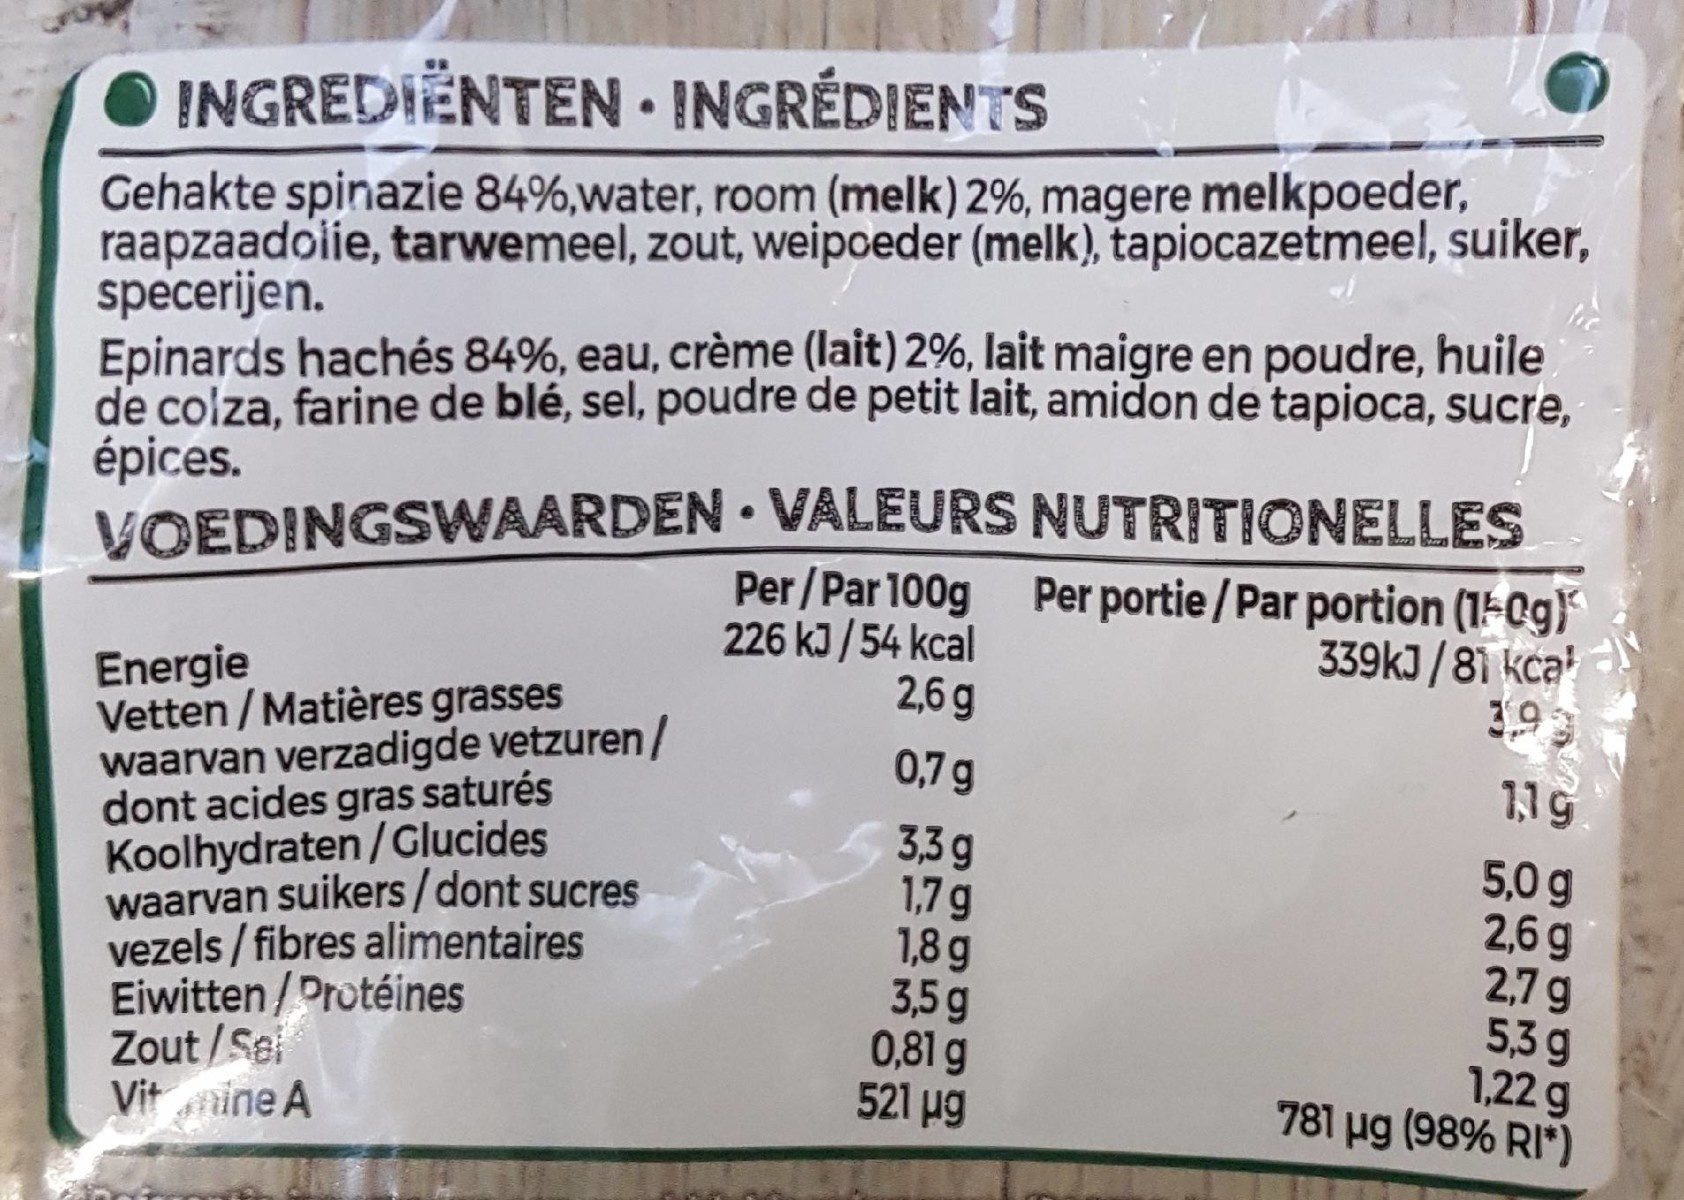 Epinards hachés à la crème - Ingrediënten - fr